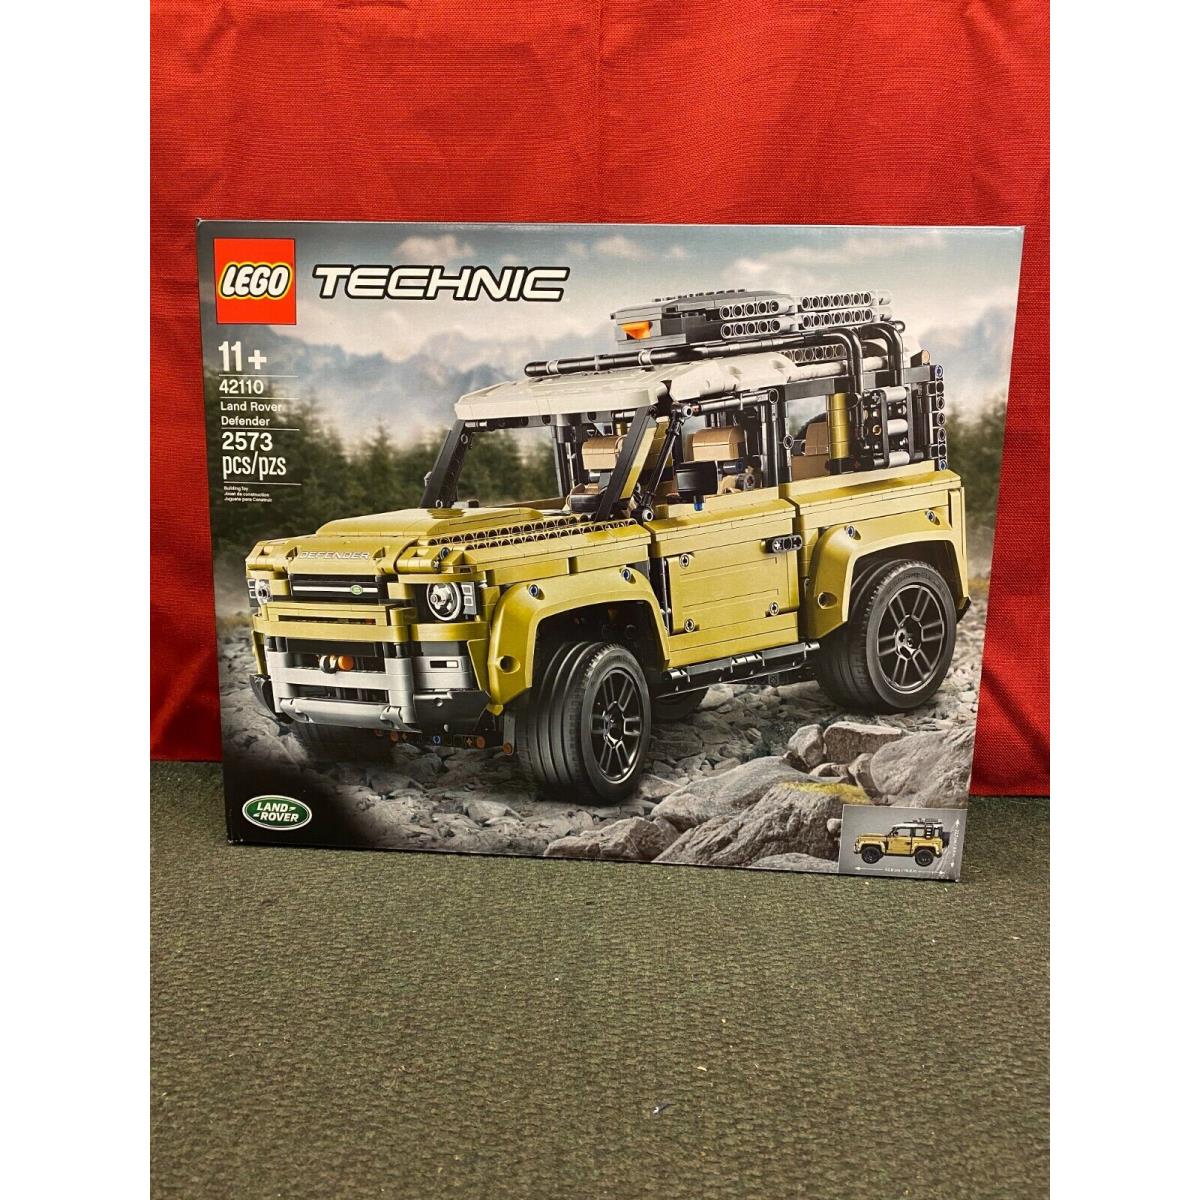 Lego Technic Land Rover Defender 42110 Building Kit 2573 Pieces